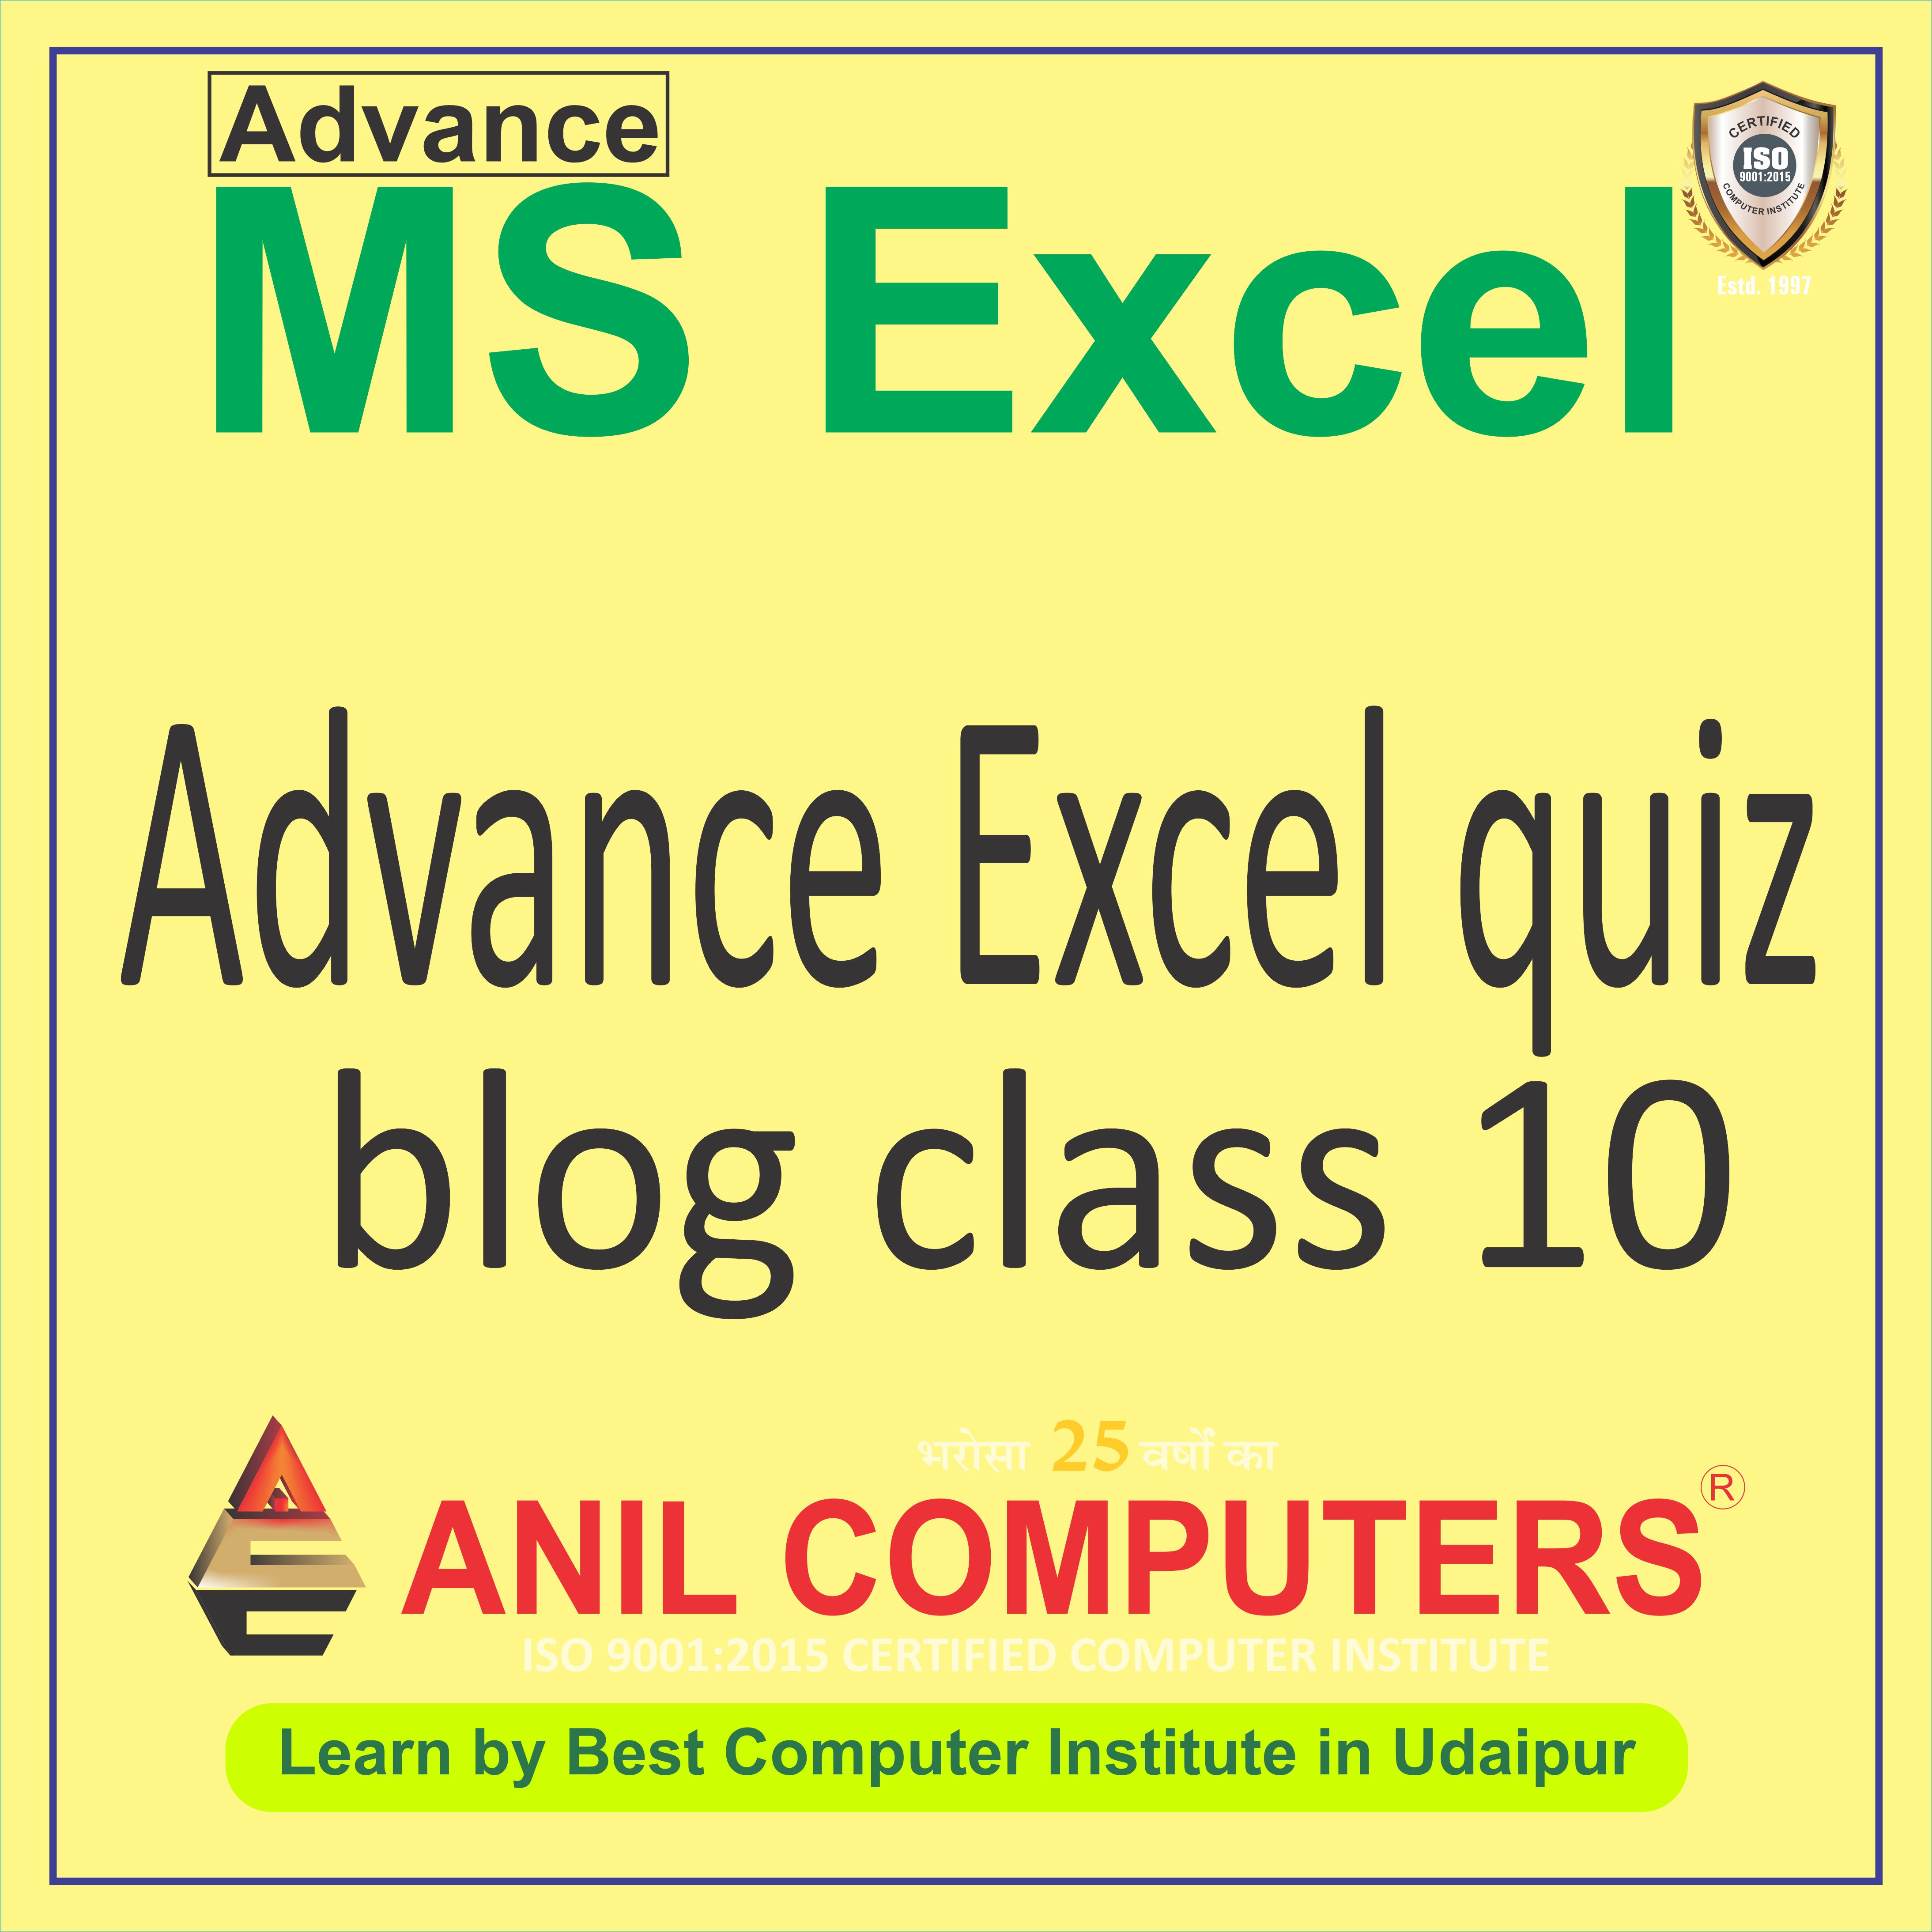 Advance Excel quiz blog class 10